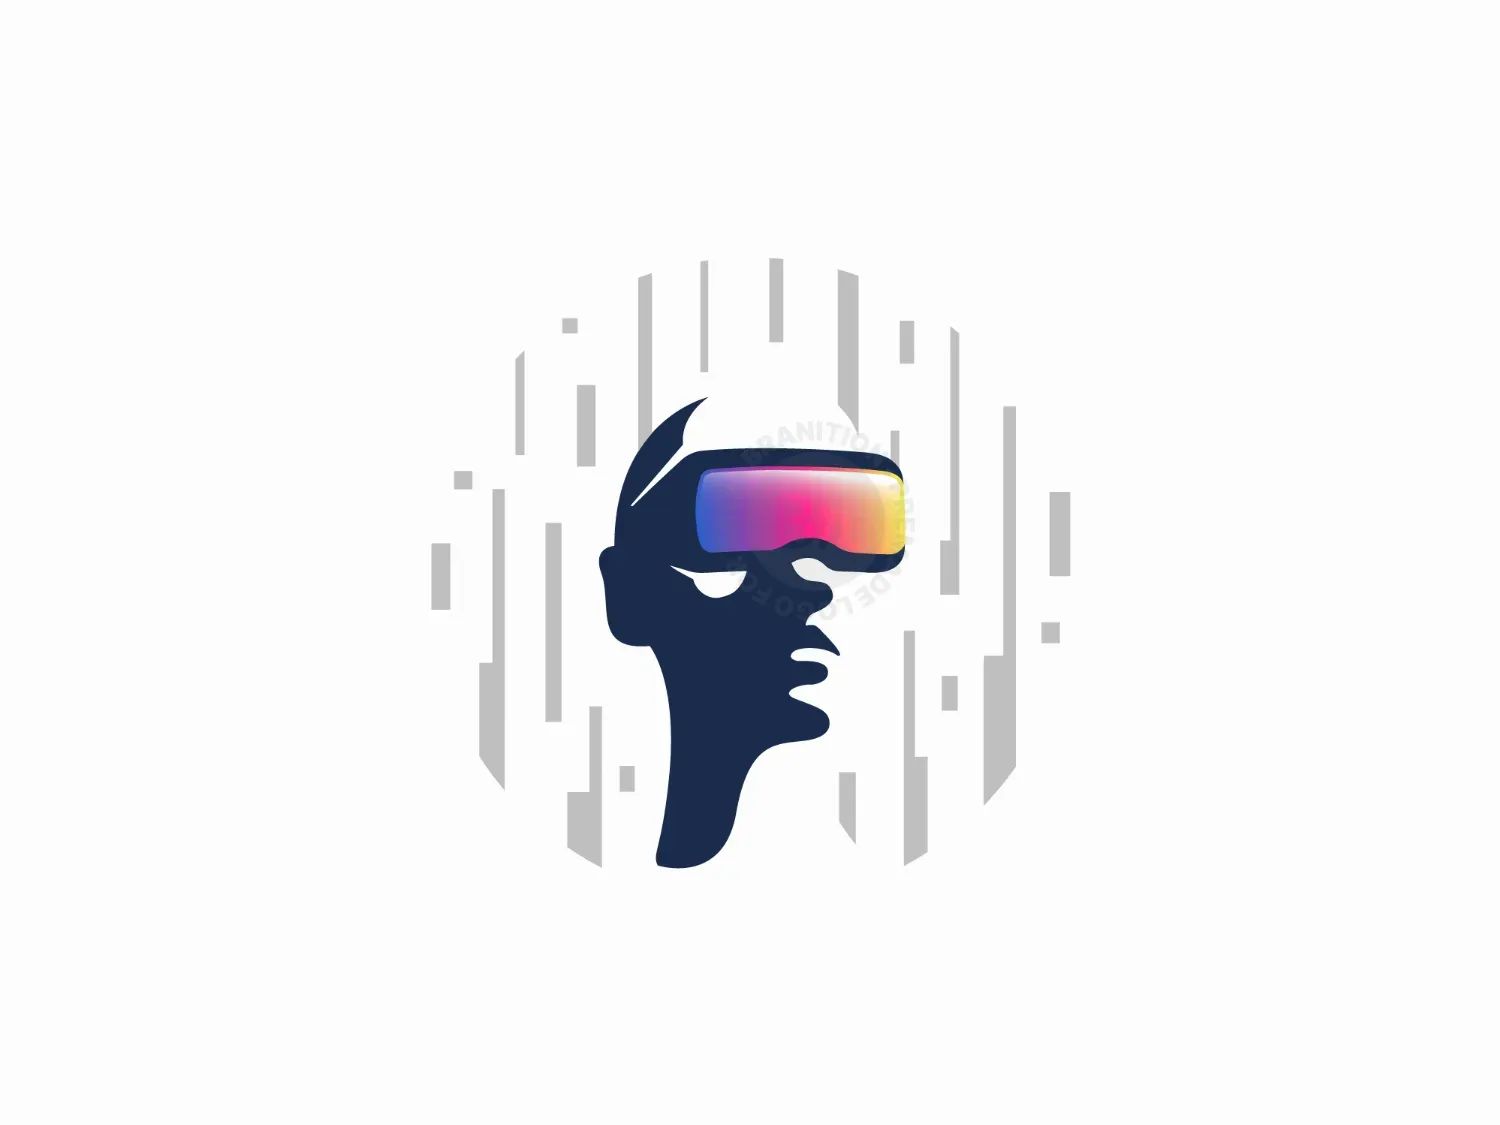 Virtual Reality Logo